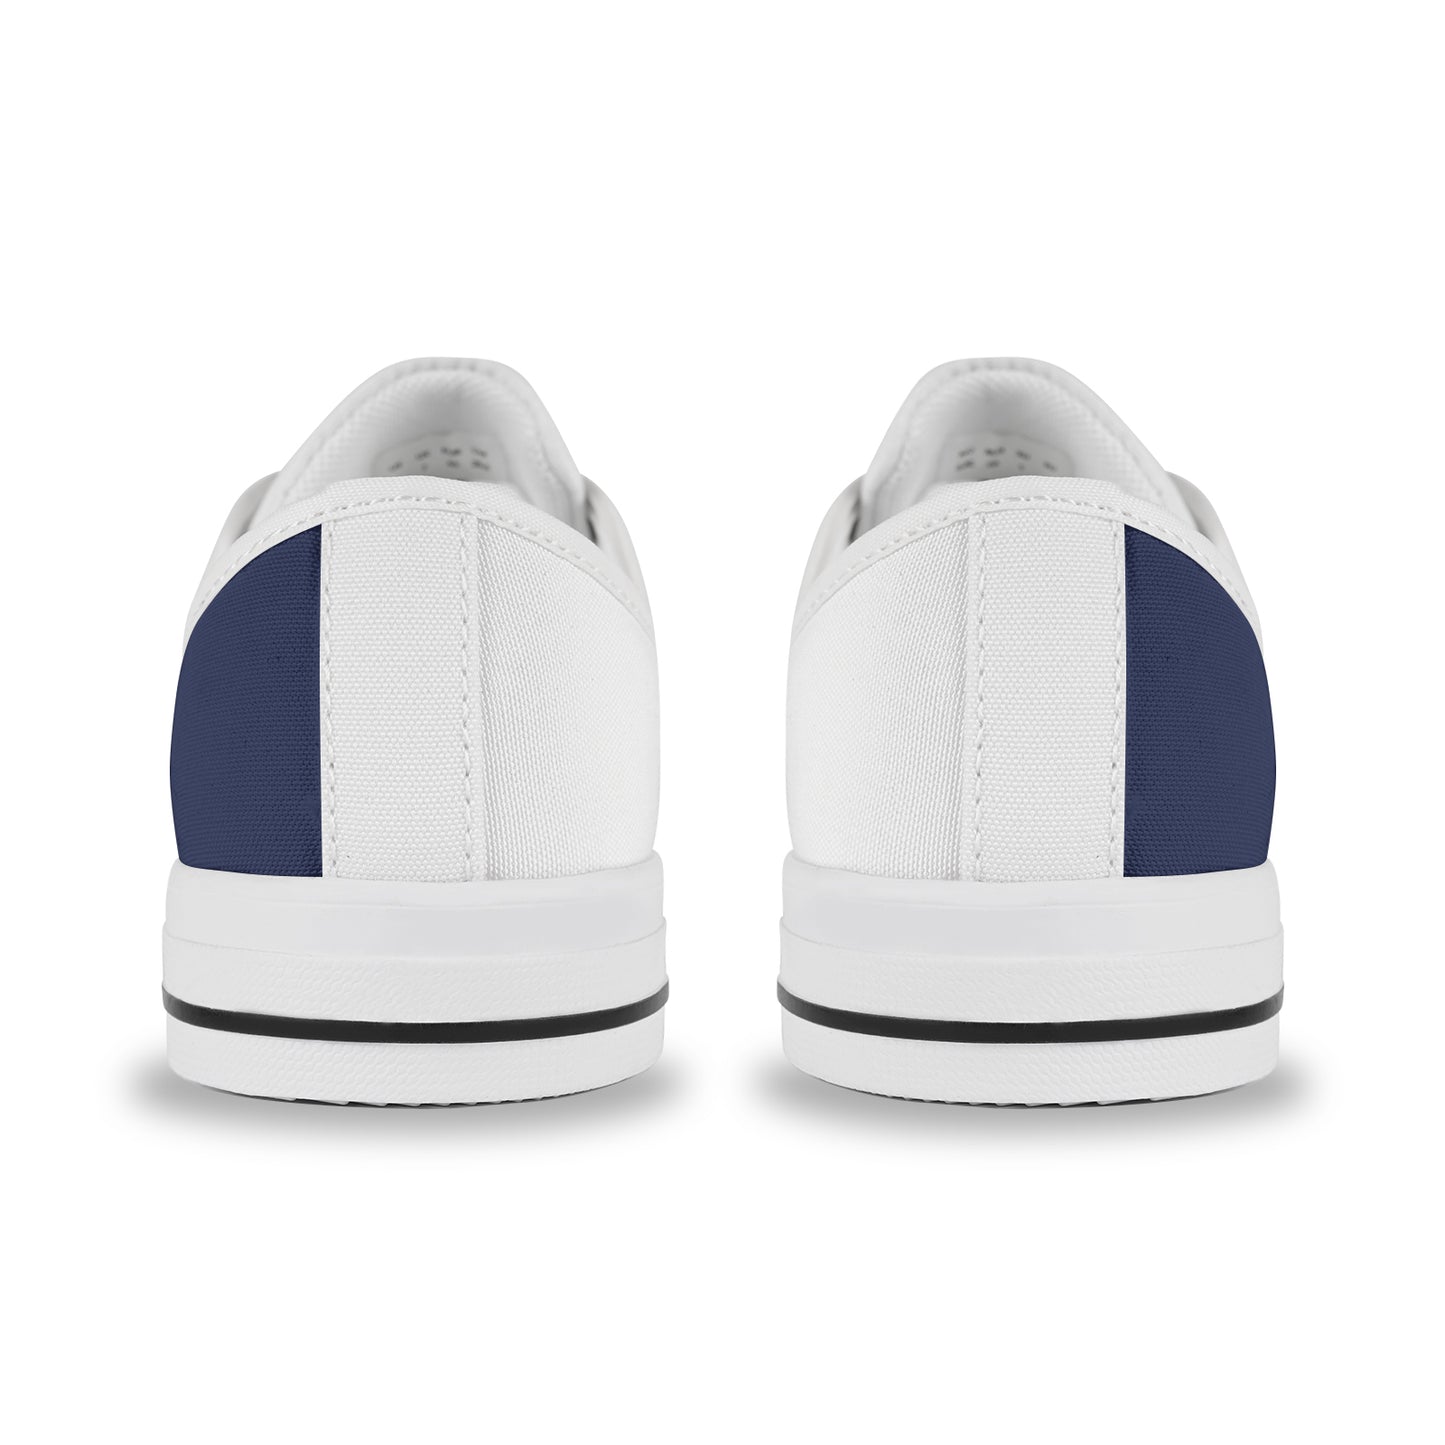 Women's Sneakers - Navy/White Combo